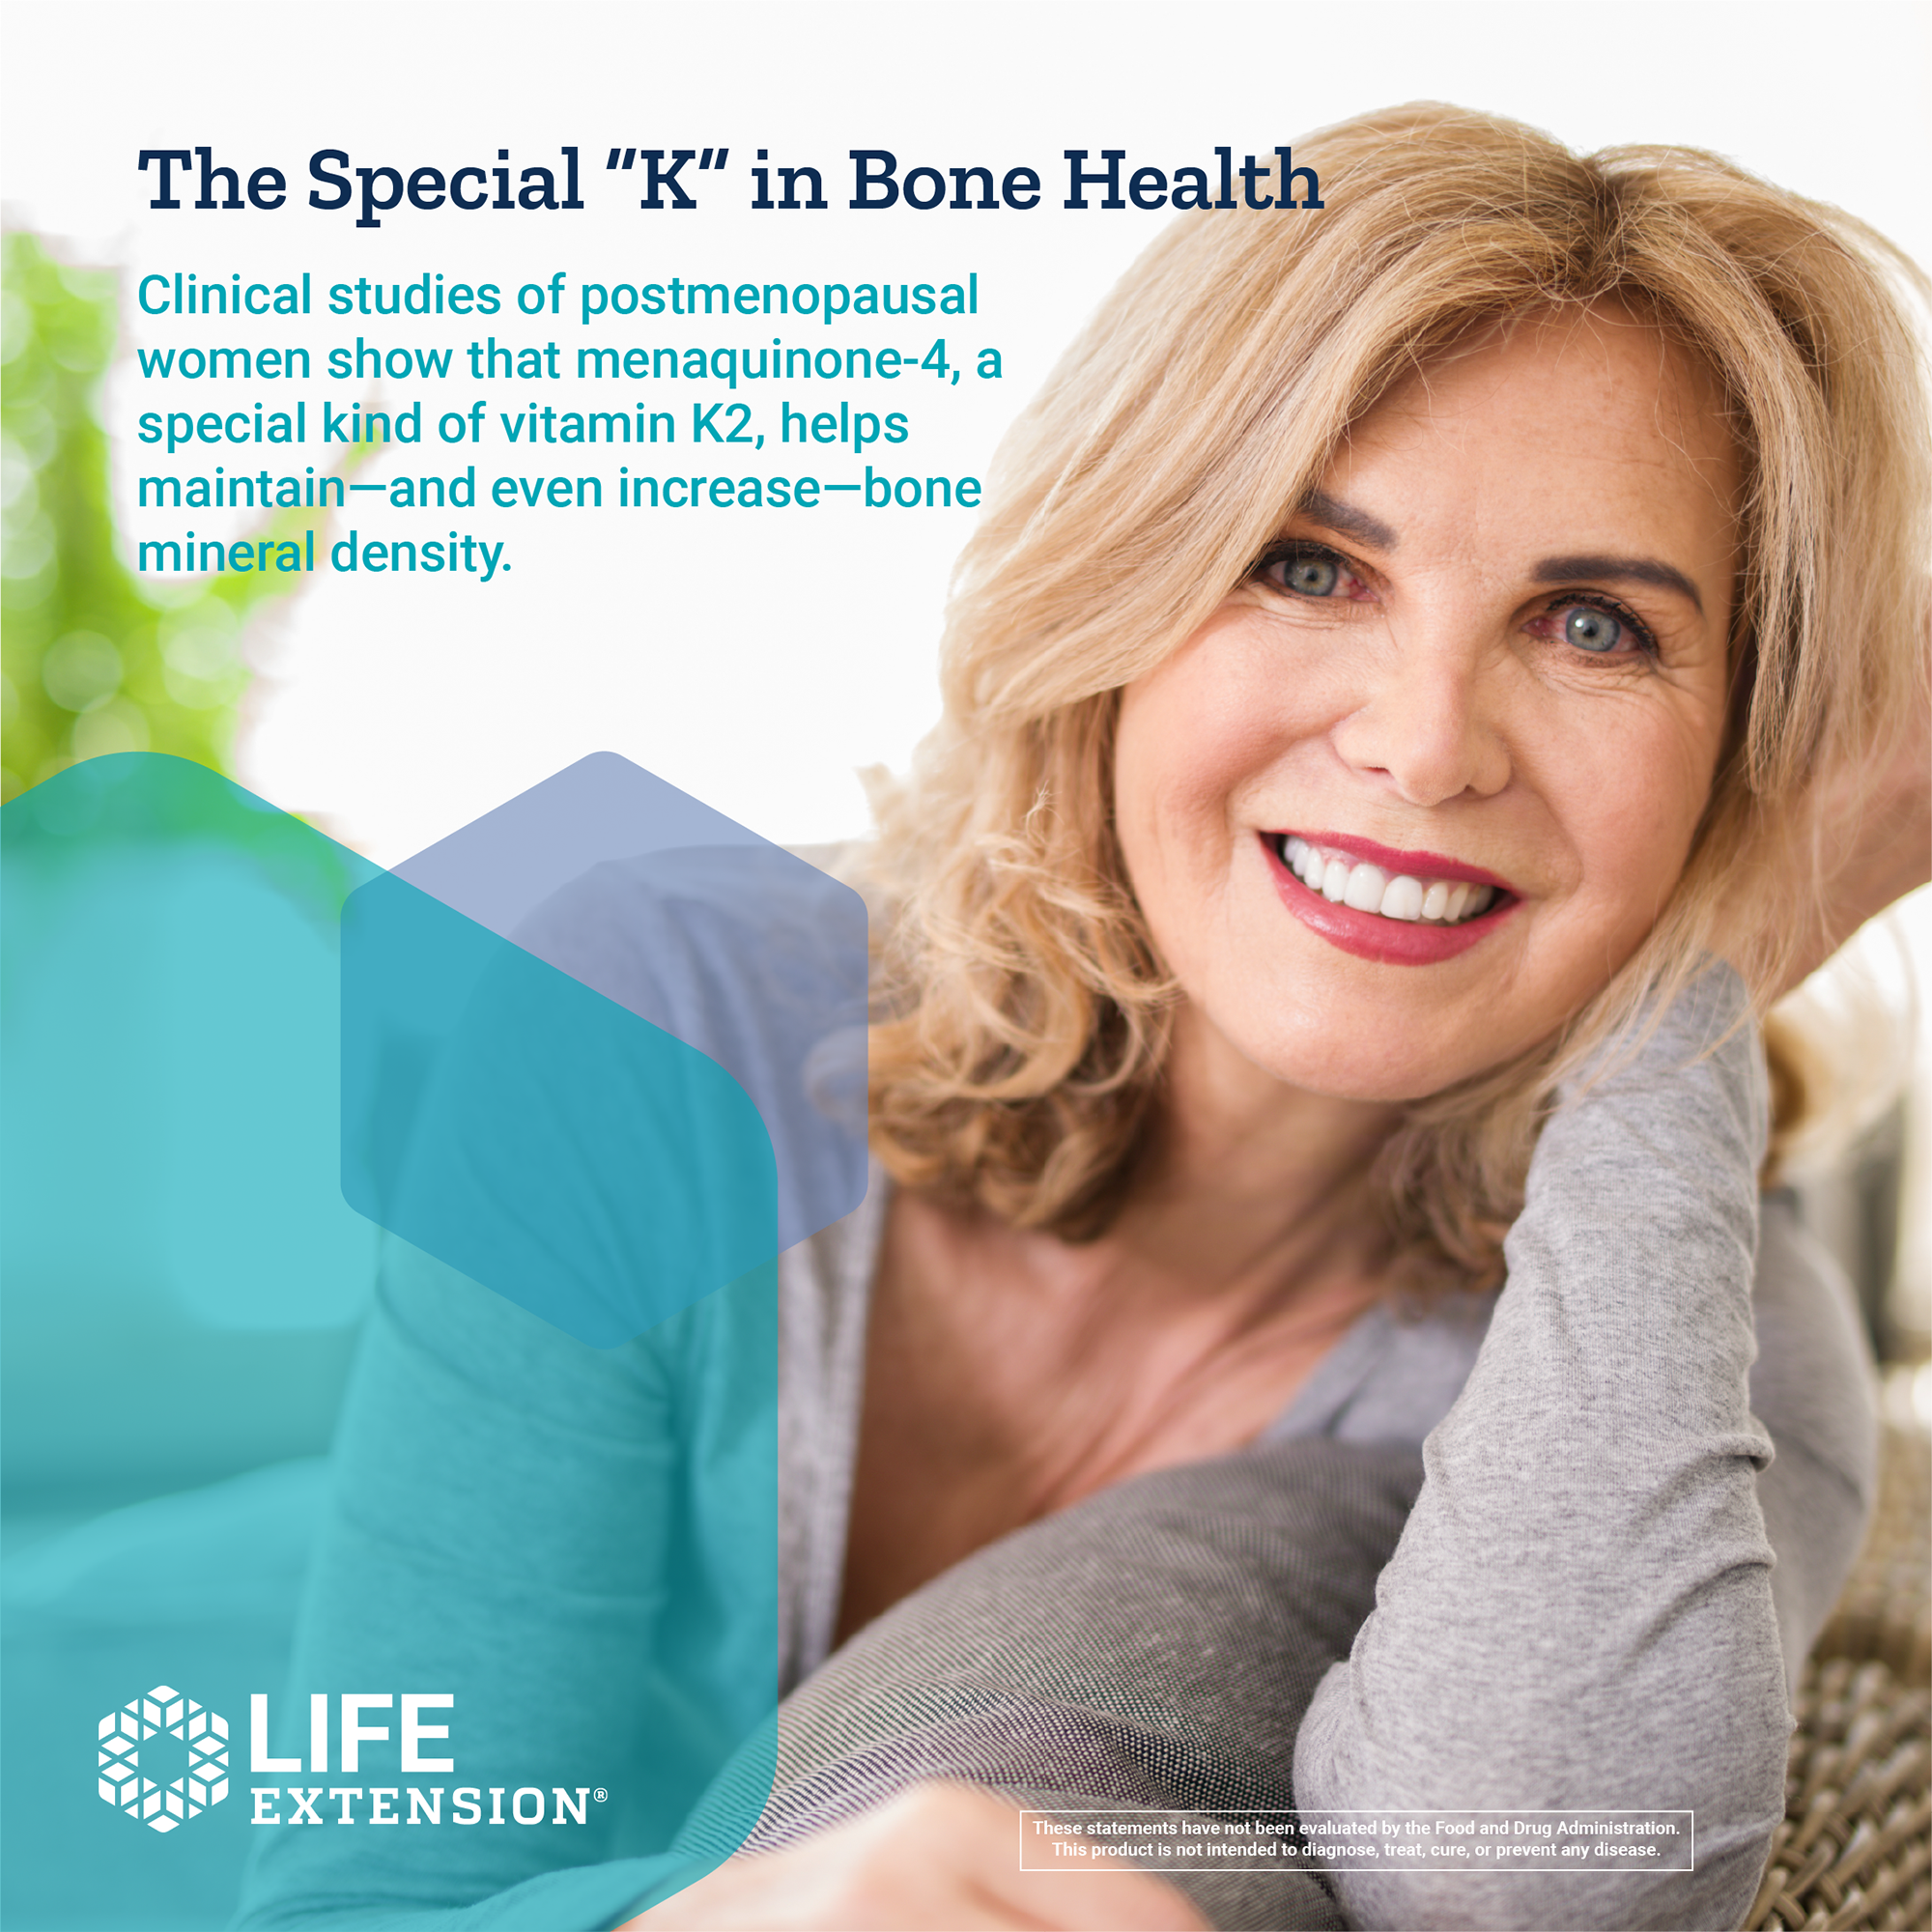 Life Extension Bone Restore Elite with Super Potent K2 - Clinically Studied Vitamin K2 Dose & Calcium, Promotes Bone Health & Density - Gluten-Free, Non-GMO - 120 Capsules - image 6 of 8